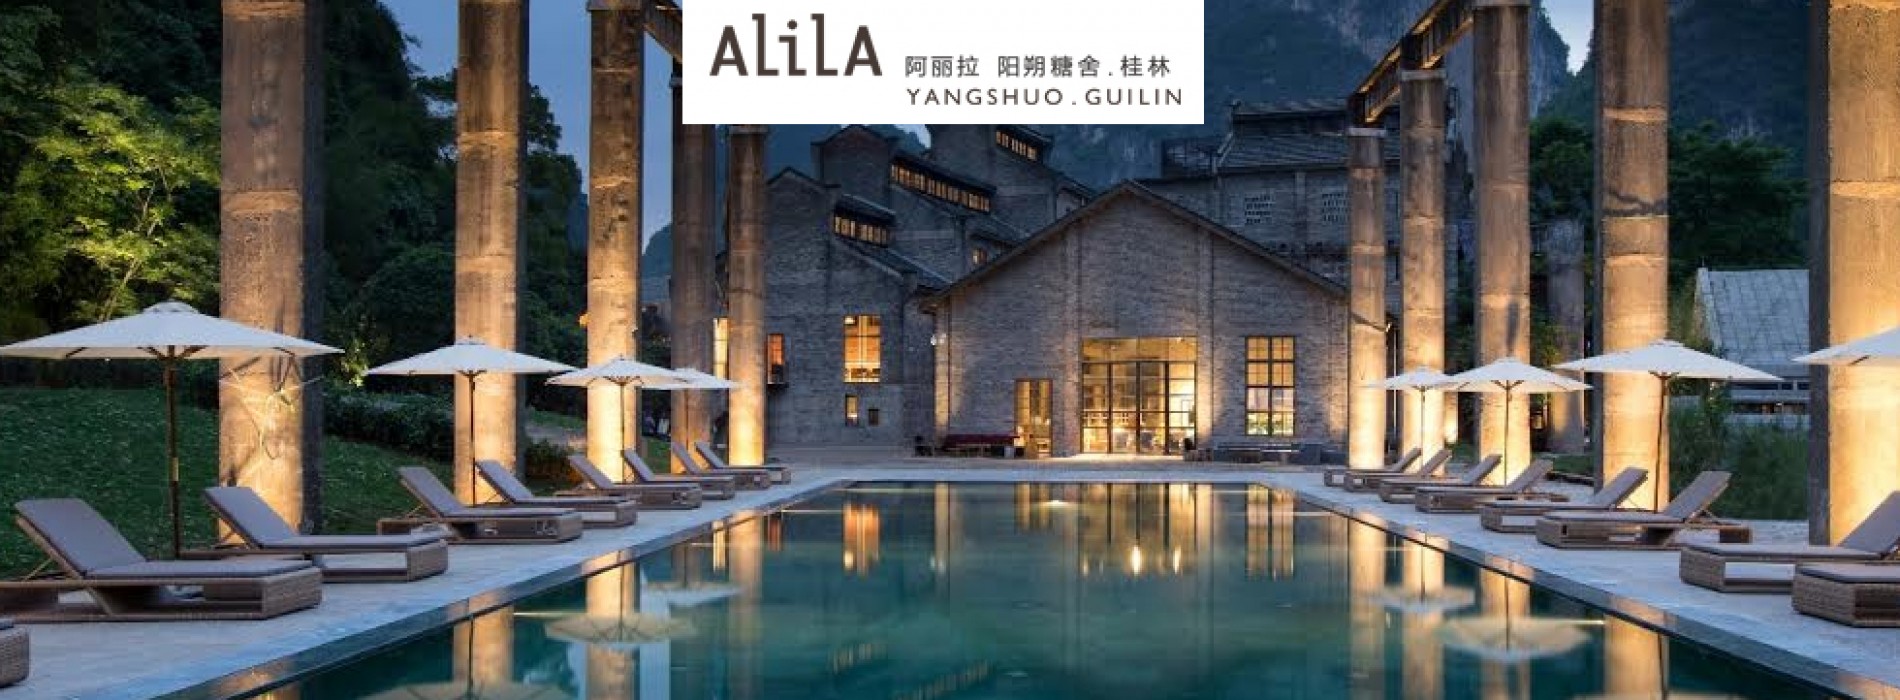 Alila Yangshuo, China- A modern resort unveiled